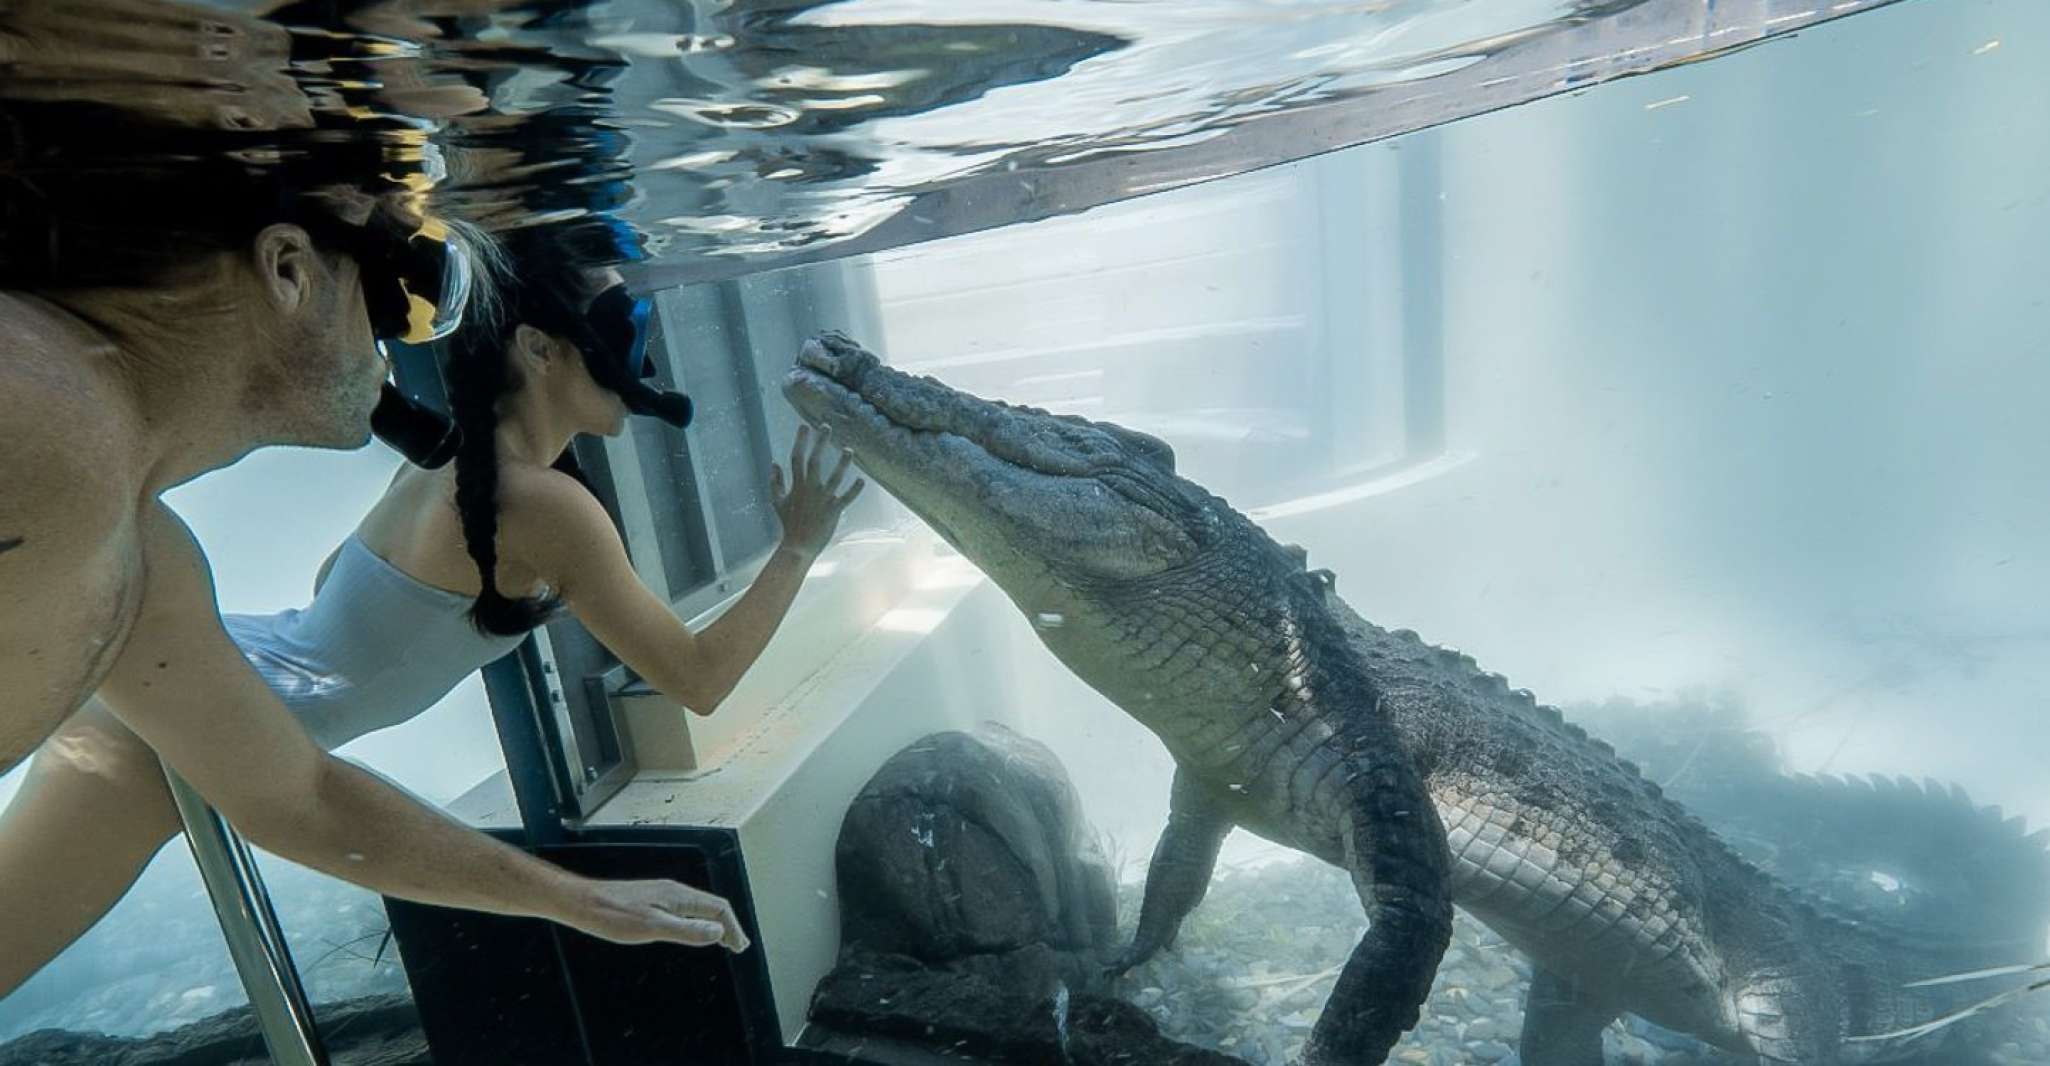 Port Douglas, Wildlife Habitat Swim with Crocodiles - Housity